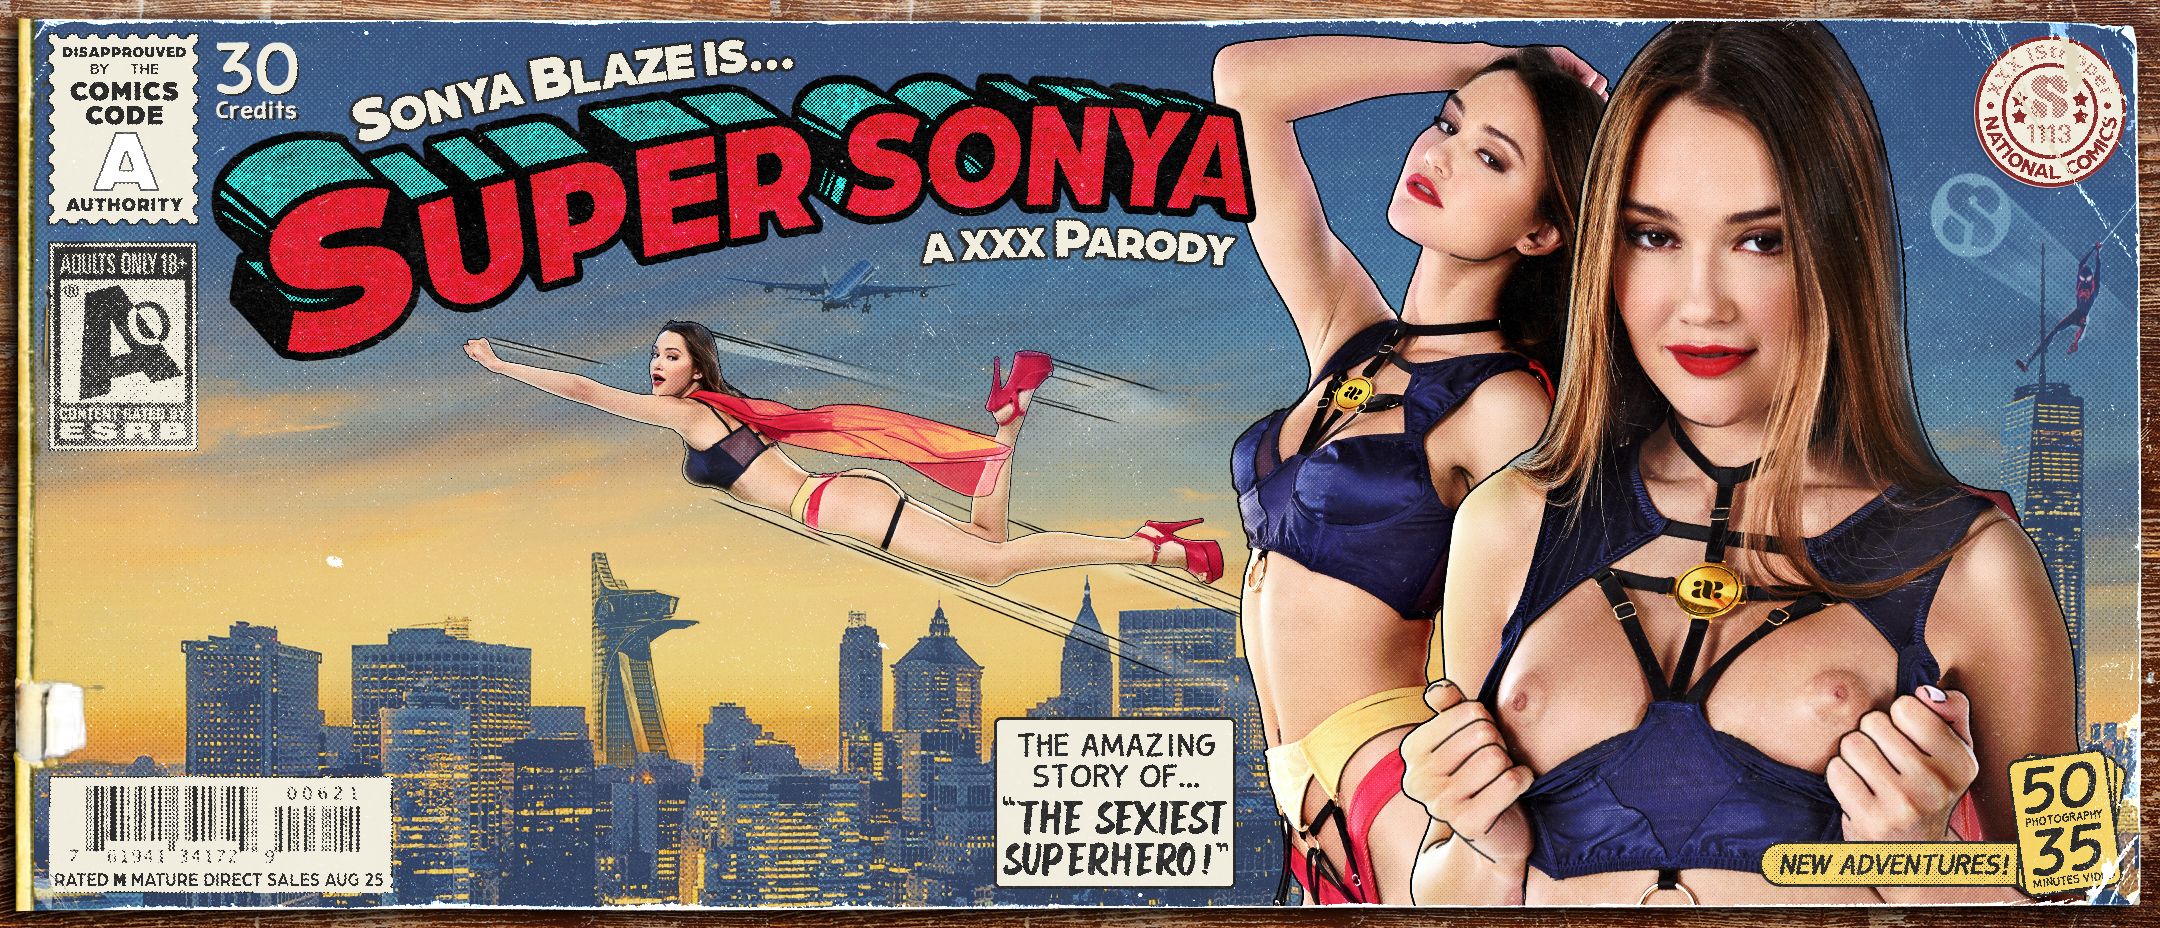 Sonya Blaze is Super Sonya